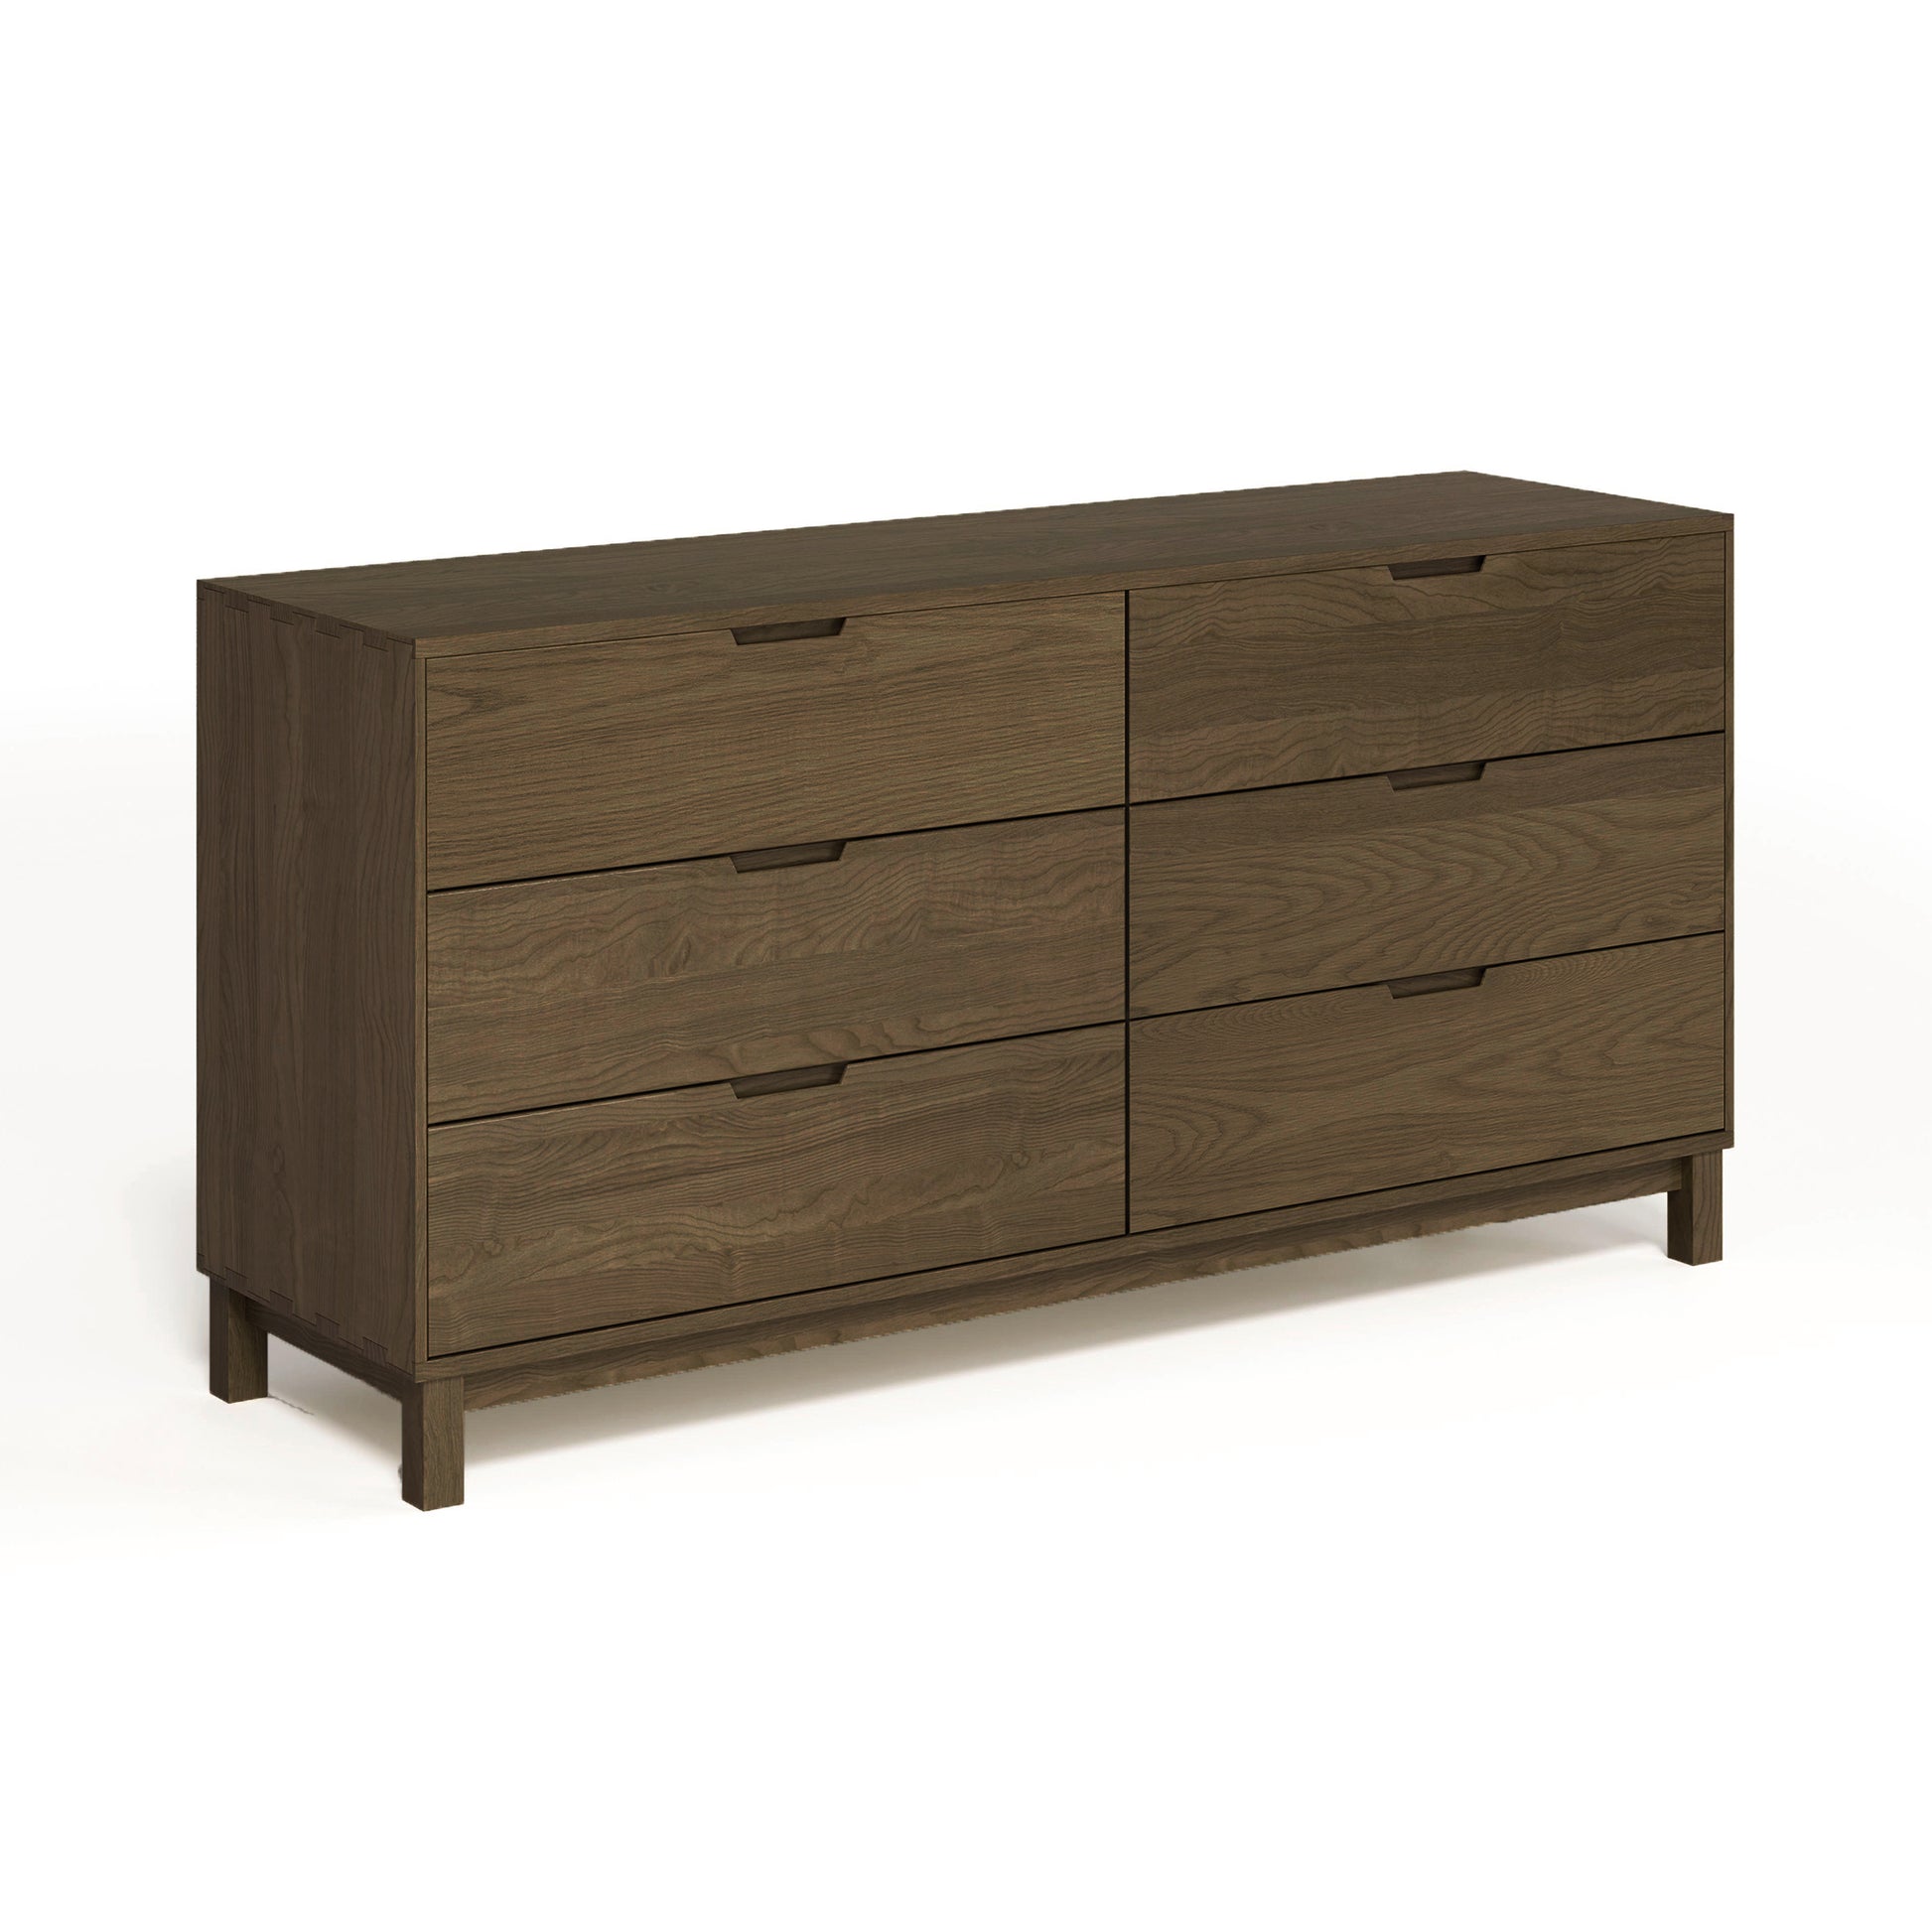 An Copeland Furniture Oslo 6-Drawer Dresser made of solid oak hardwood on a plain background.